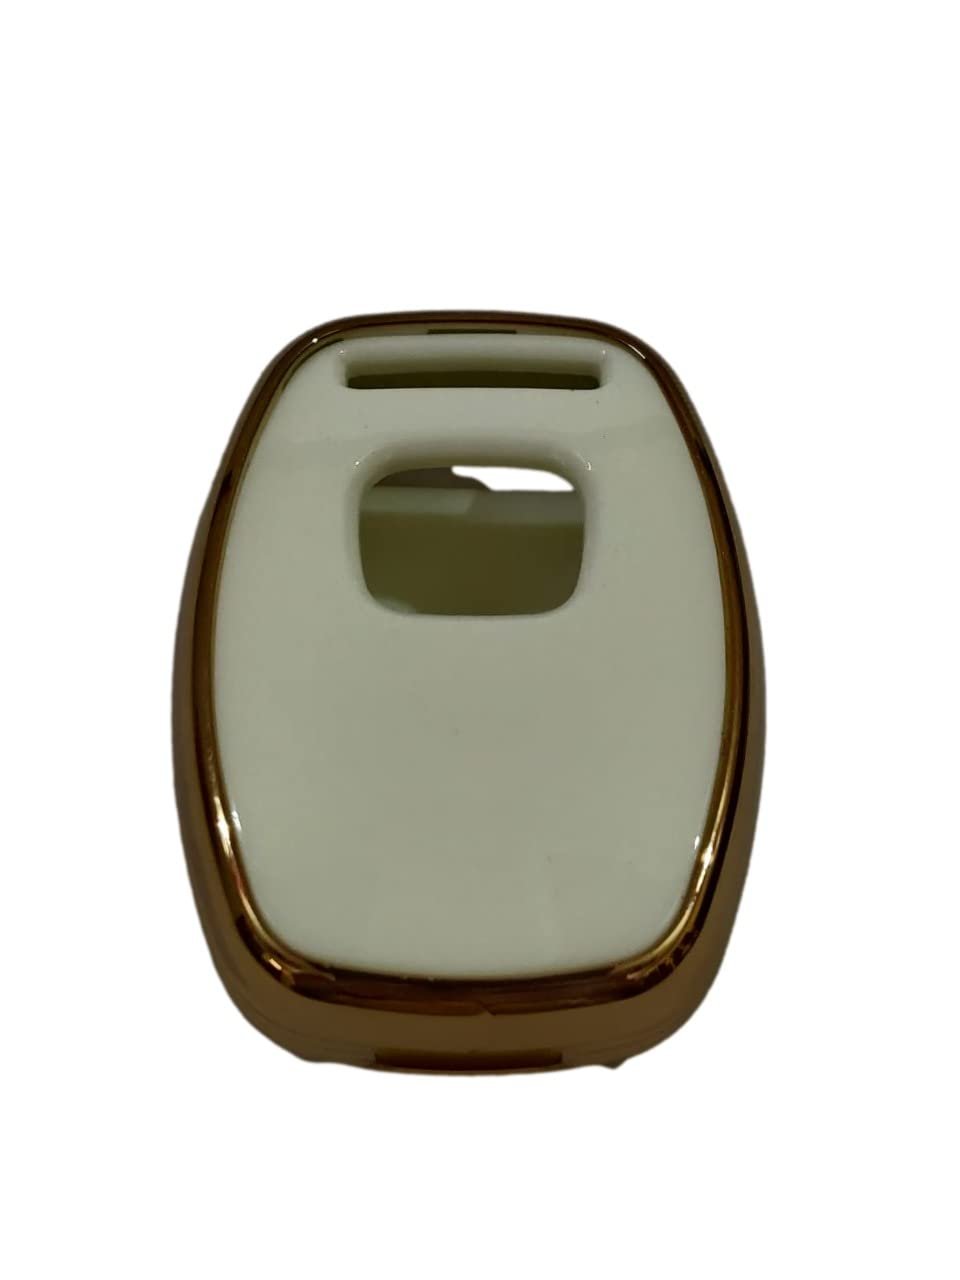 TPU silicone key cover for Compatible with City, CIvic, Jazz, Brio, Amaze 2 button remote key (White)